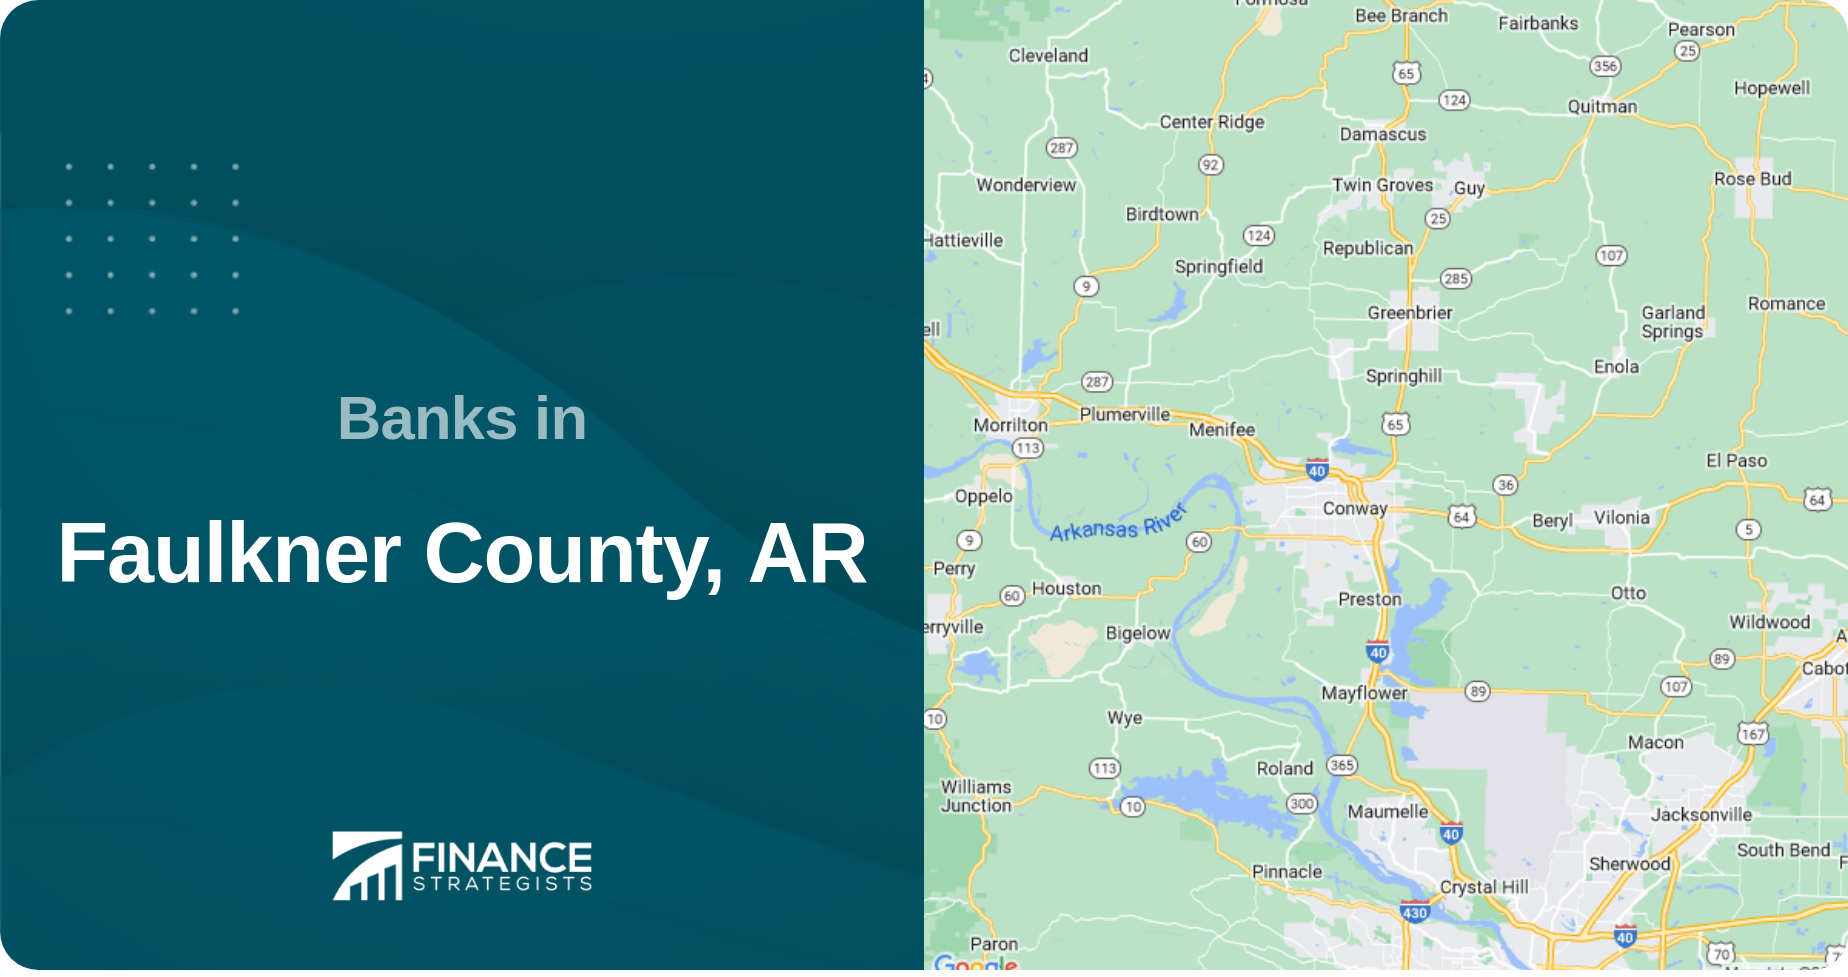 Banks in Faulkner County, AR